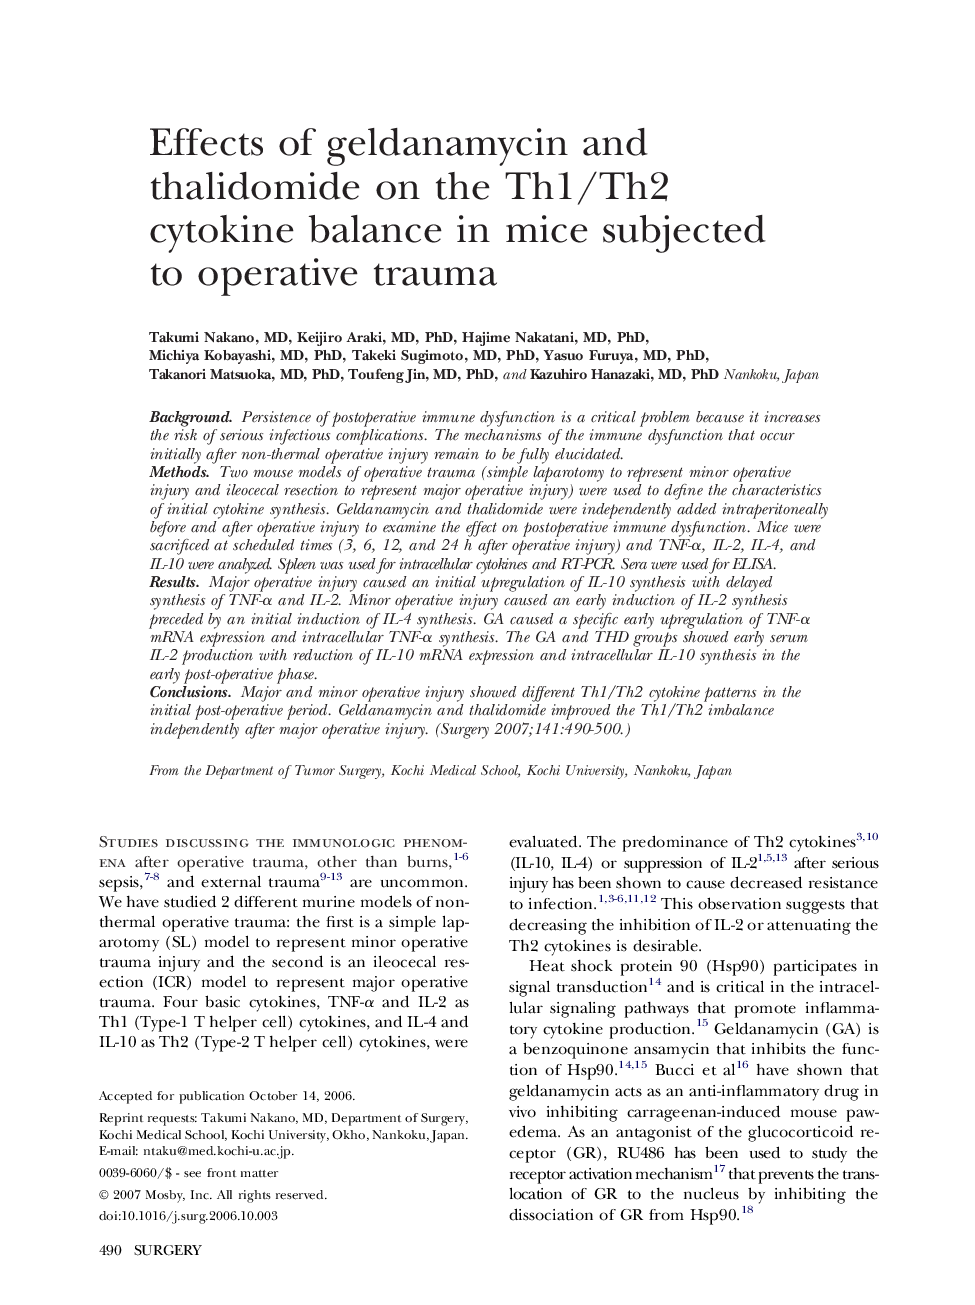 Effects of geldanamycin and thalidomide on the Th1/Th2 cytokine balance in mice subjected to operative trauma